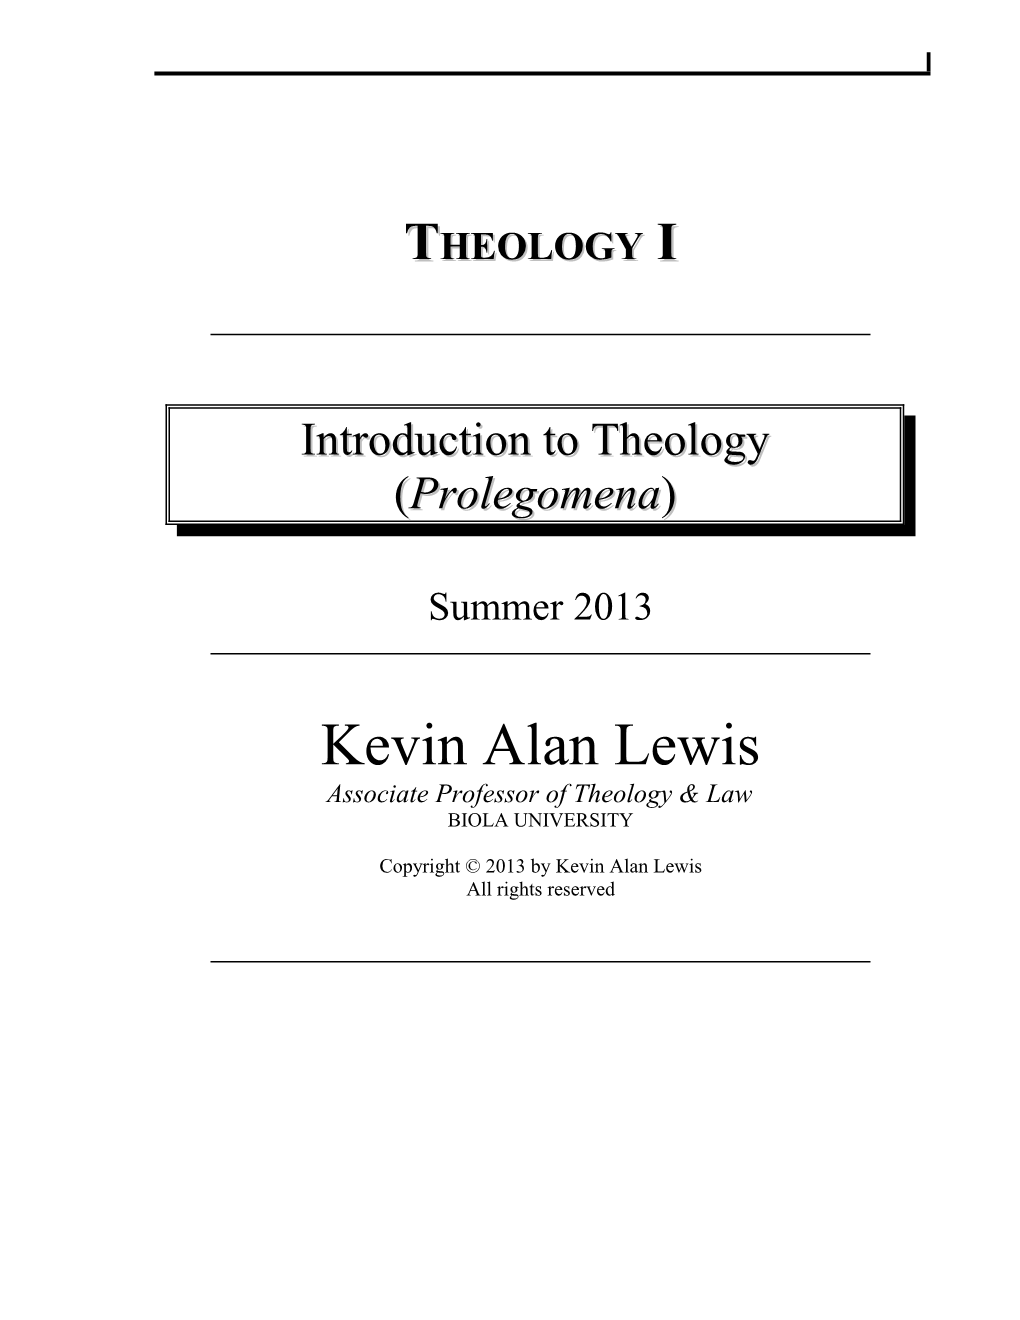 Introduction to Theology (Prolegomena)